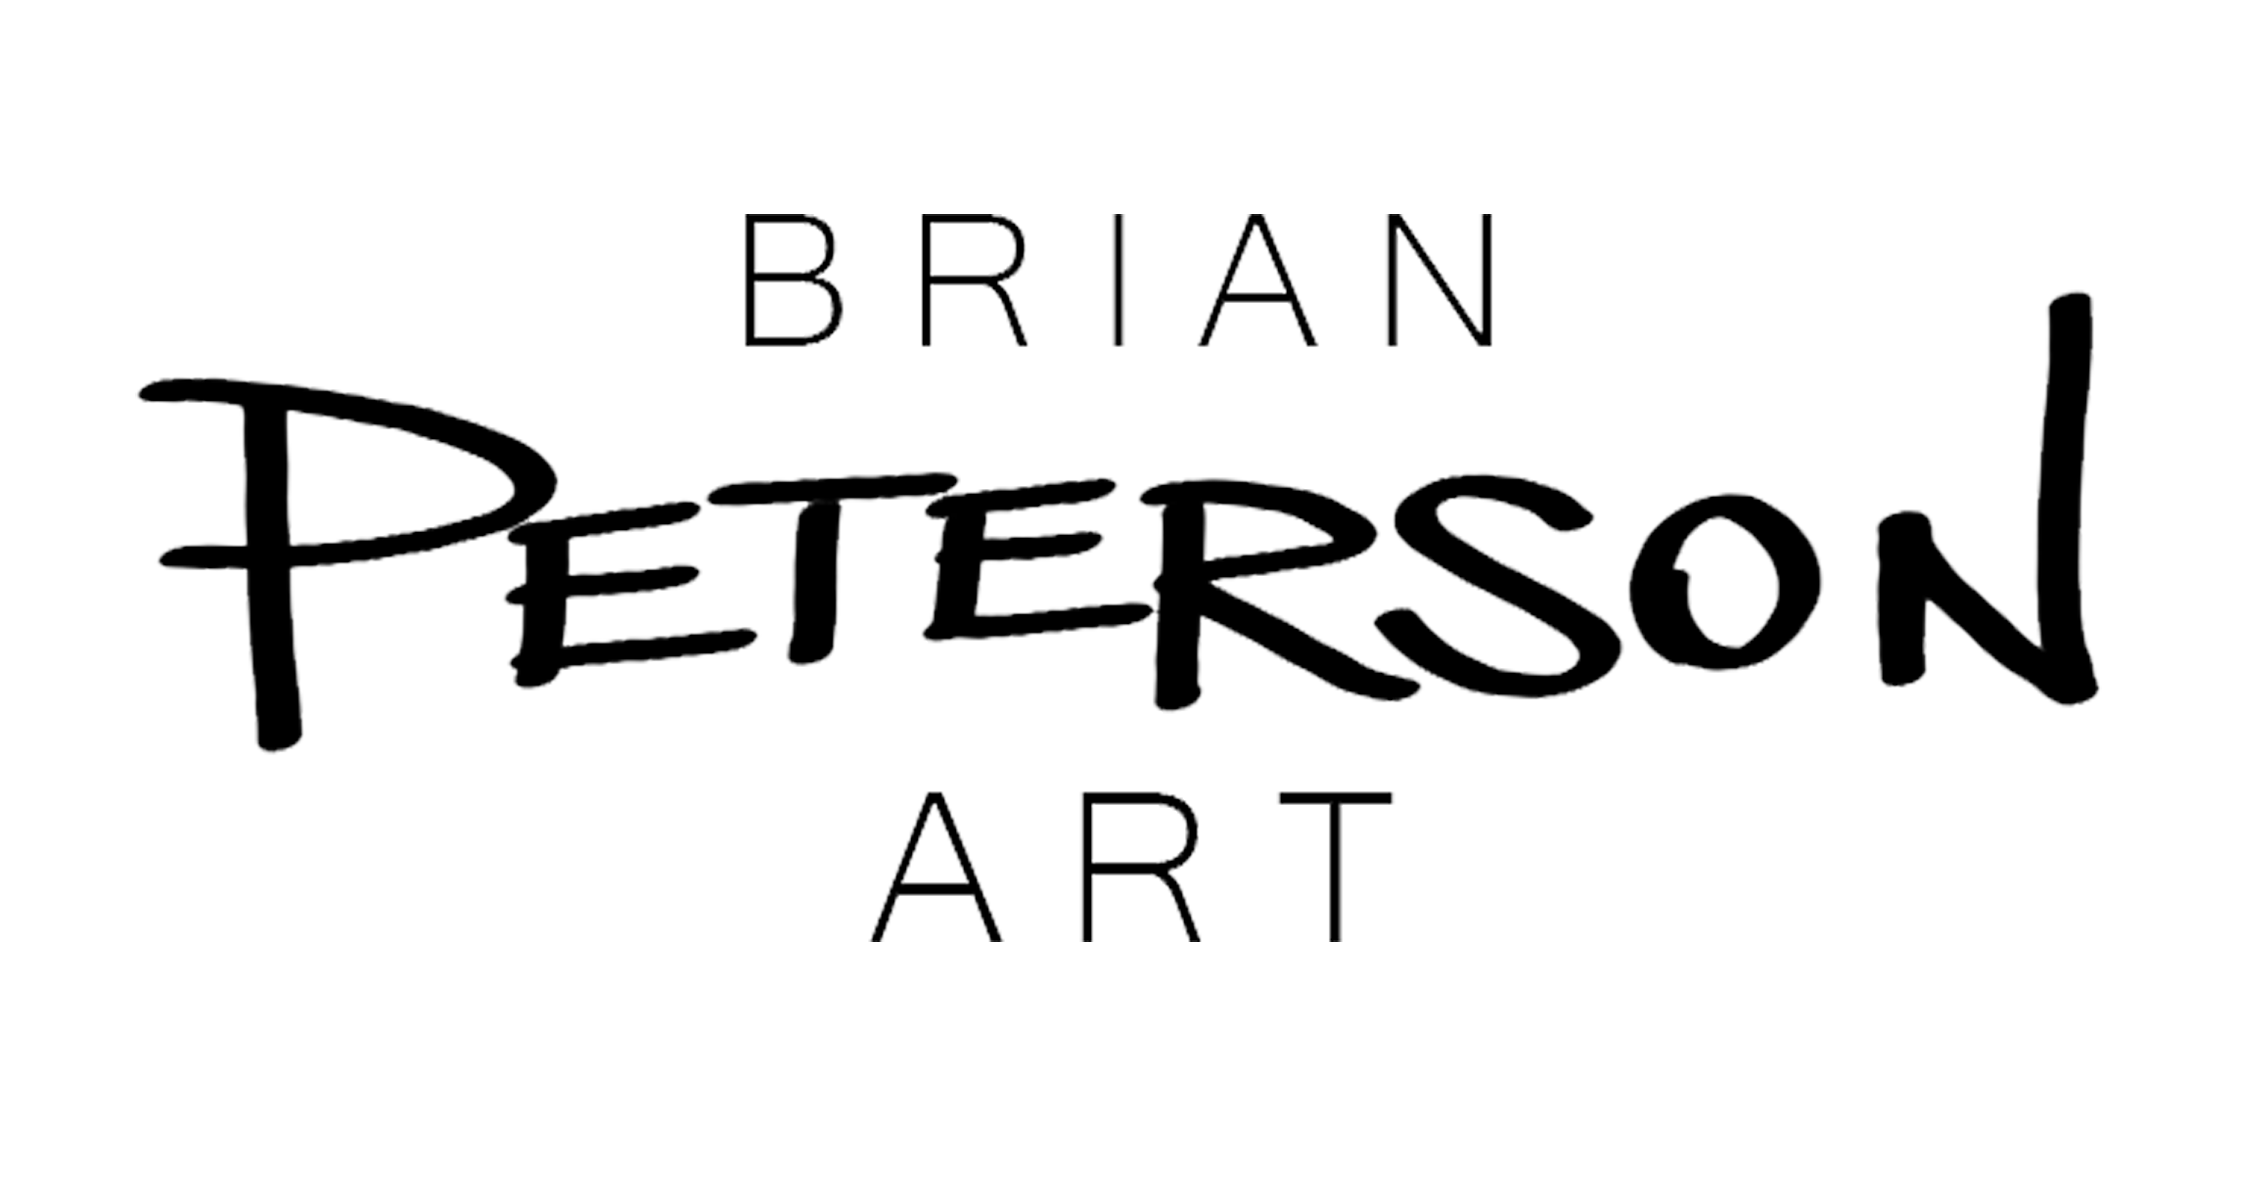 Brian Peterson Art